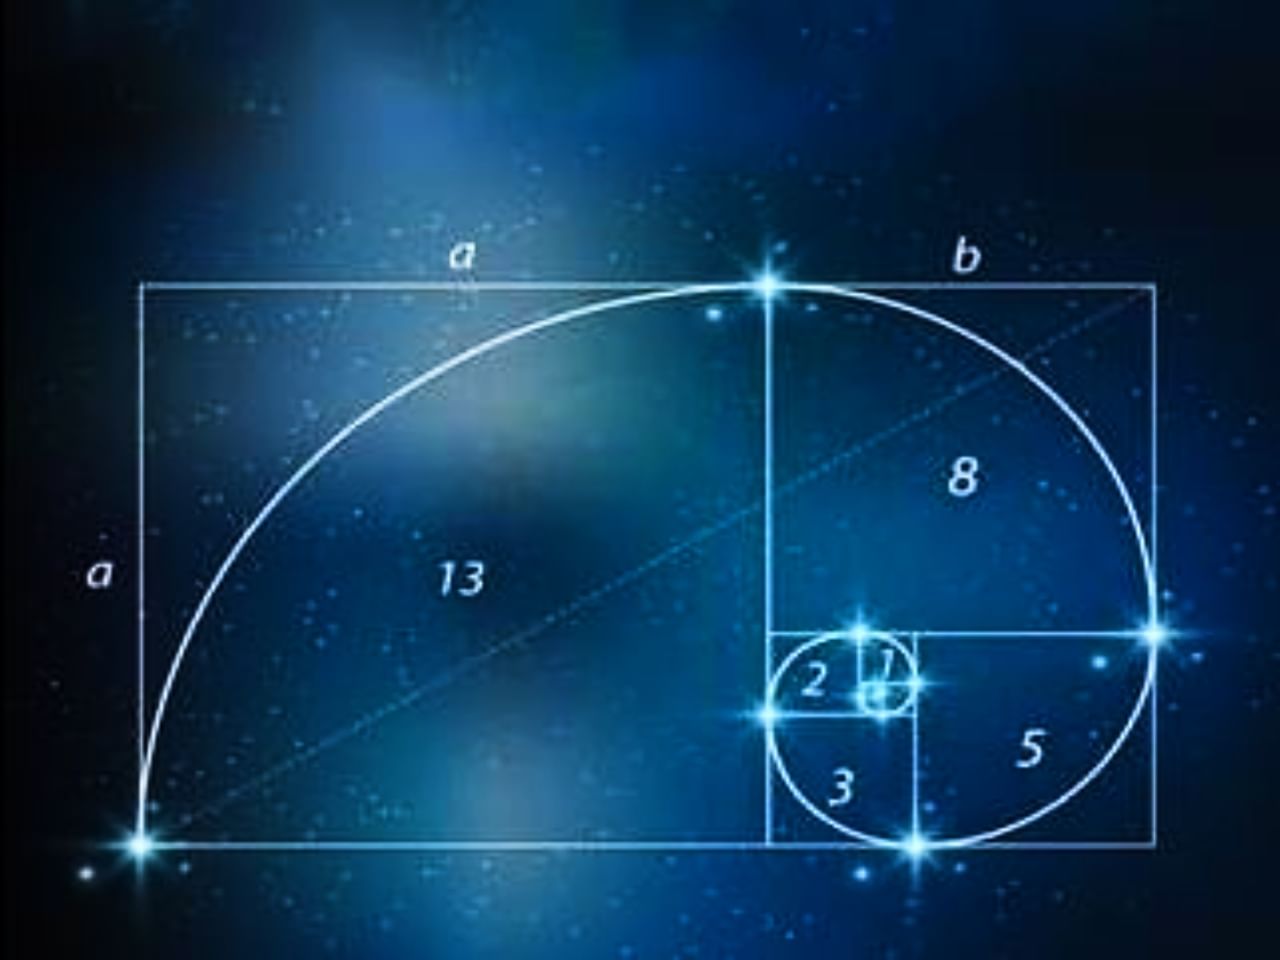 fibonacci number